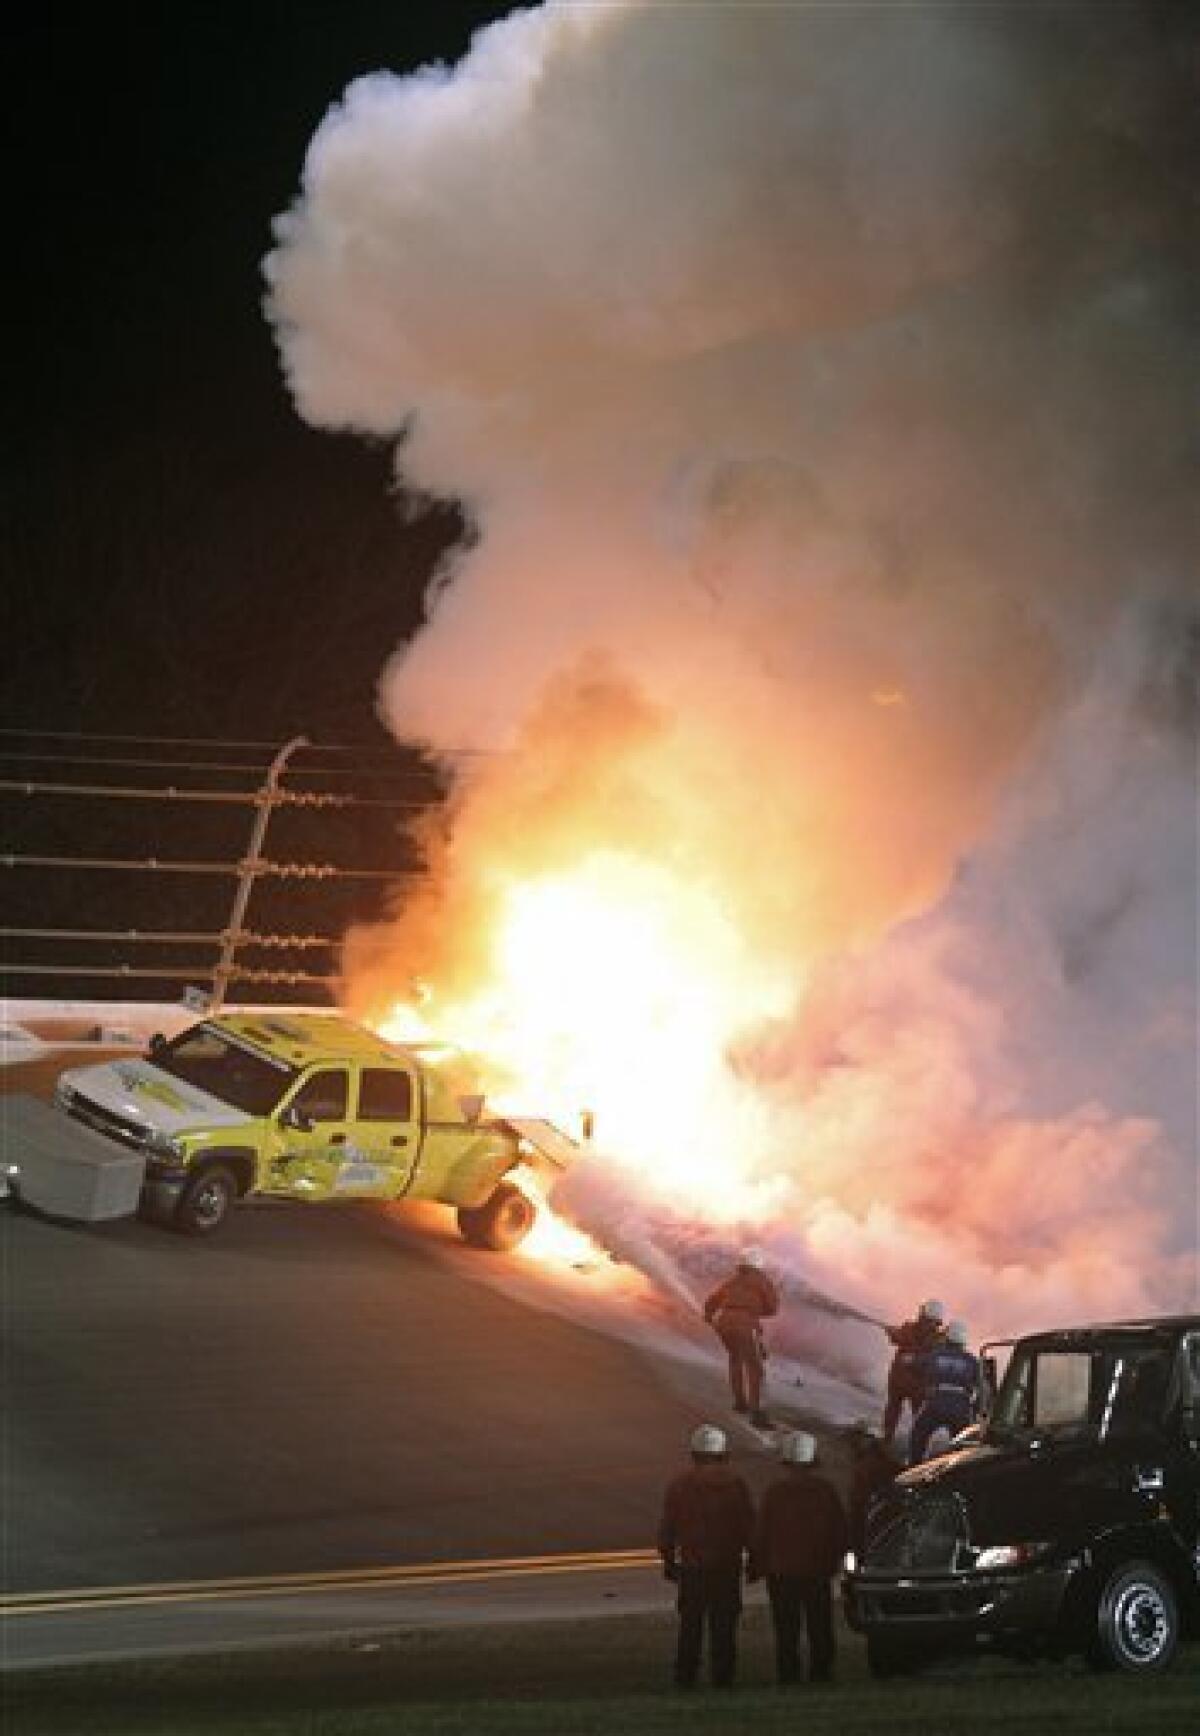 Emergency workers try to put out a fire on a jet dryer during the NASCAR Daytona 500 auto race at Daytona International Speedway in Daytona Beach, Fla., Monday, Feb. 27, 2012. (AP Photo/Bill Friel)